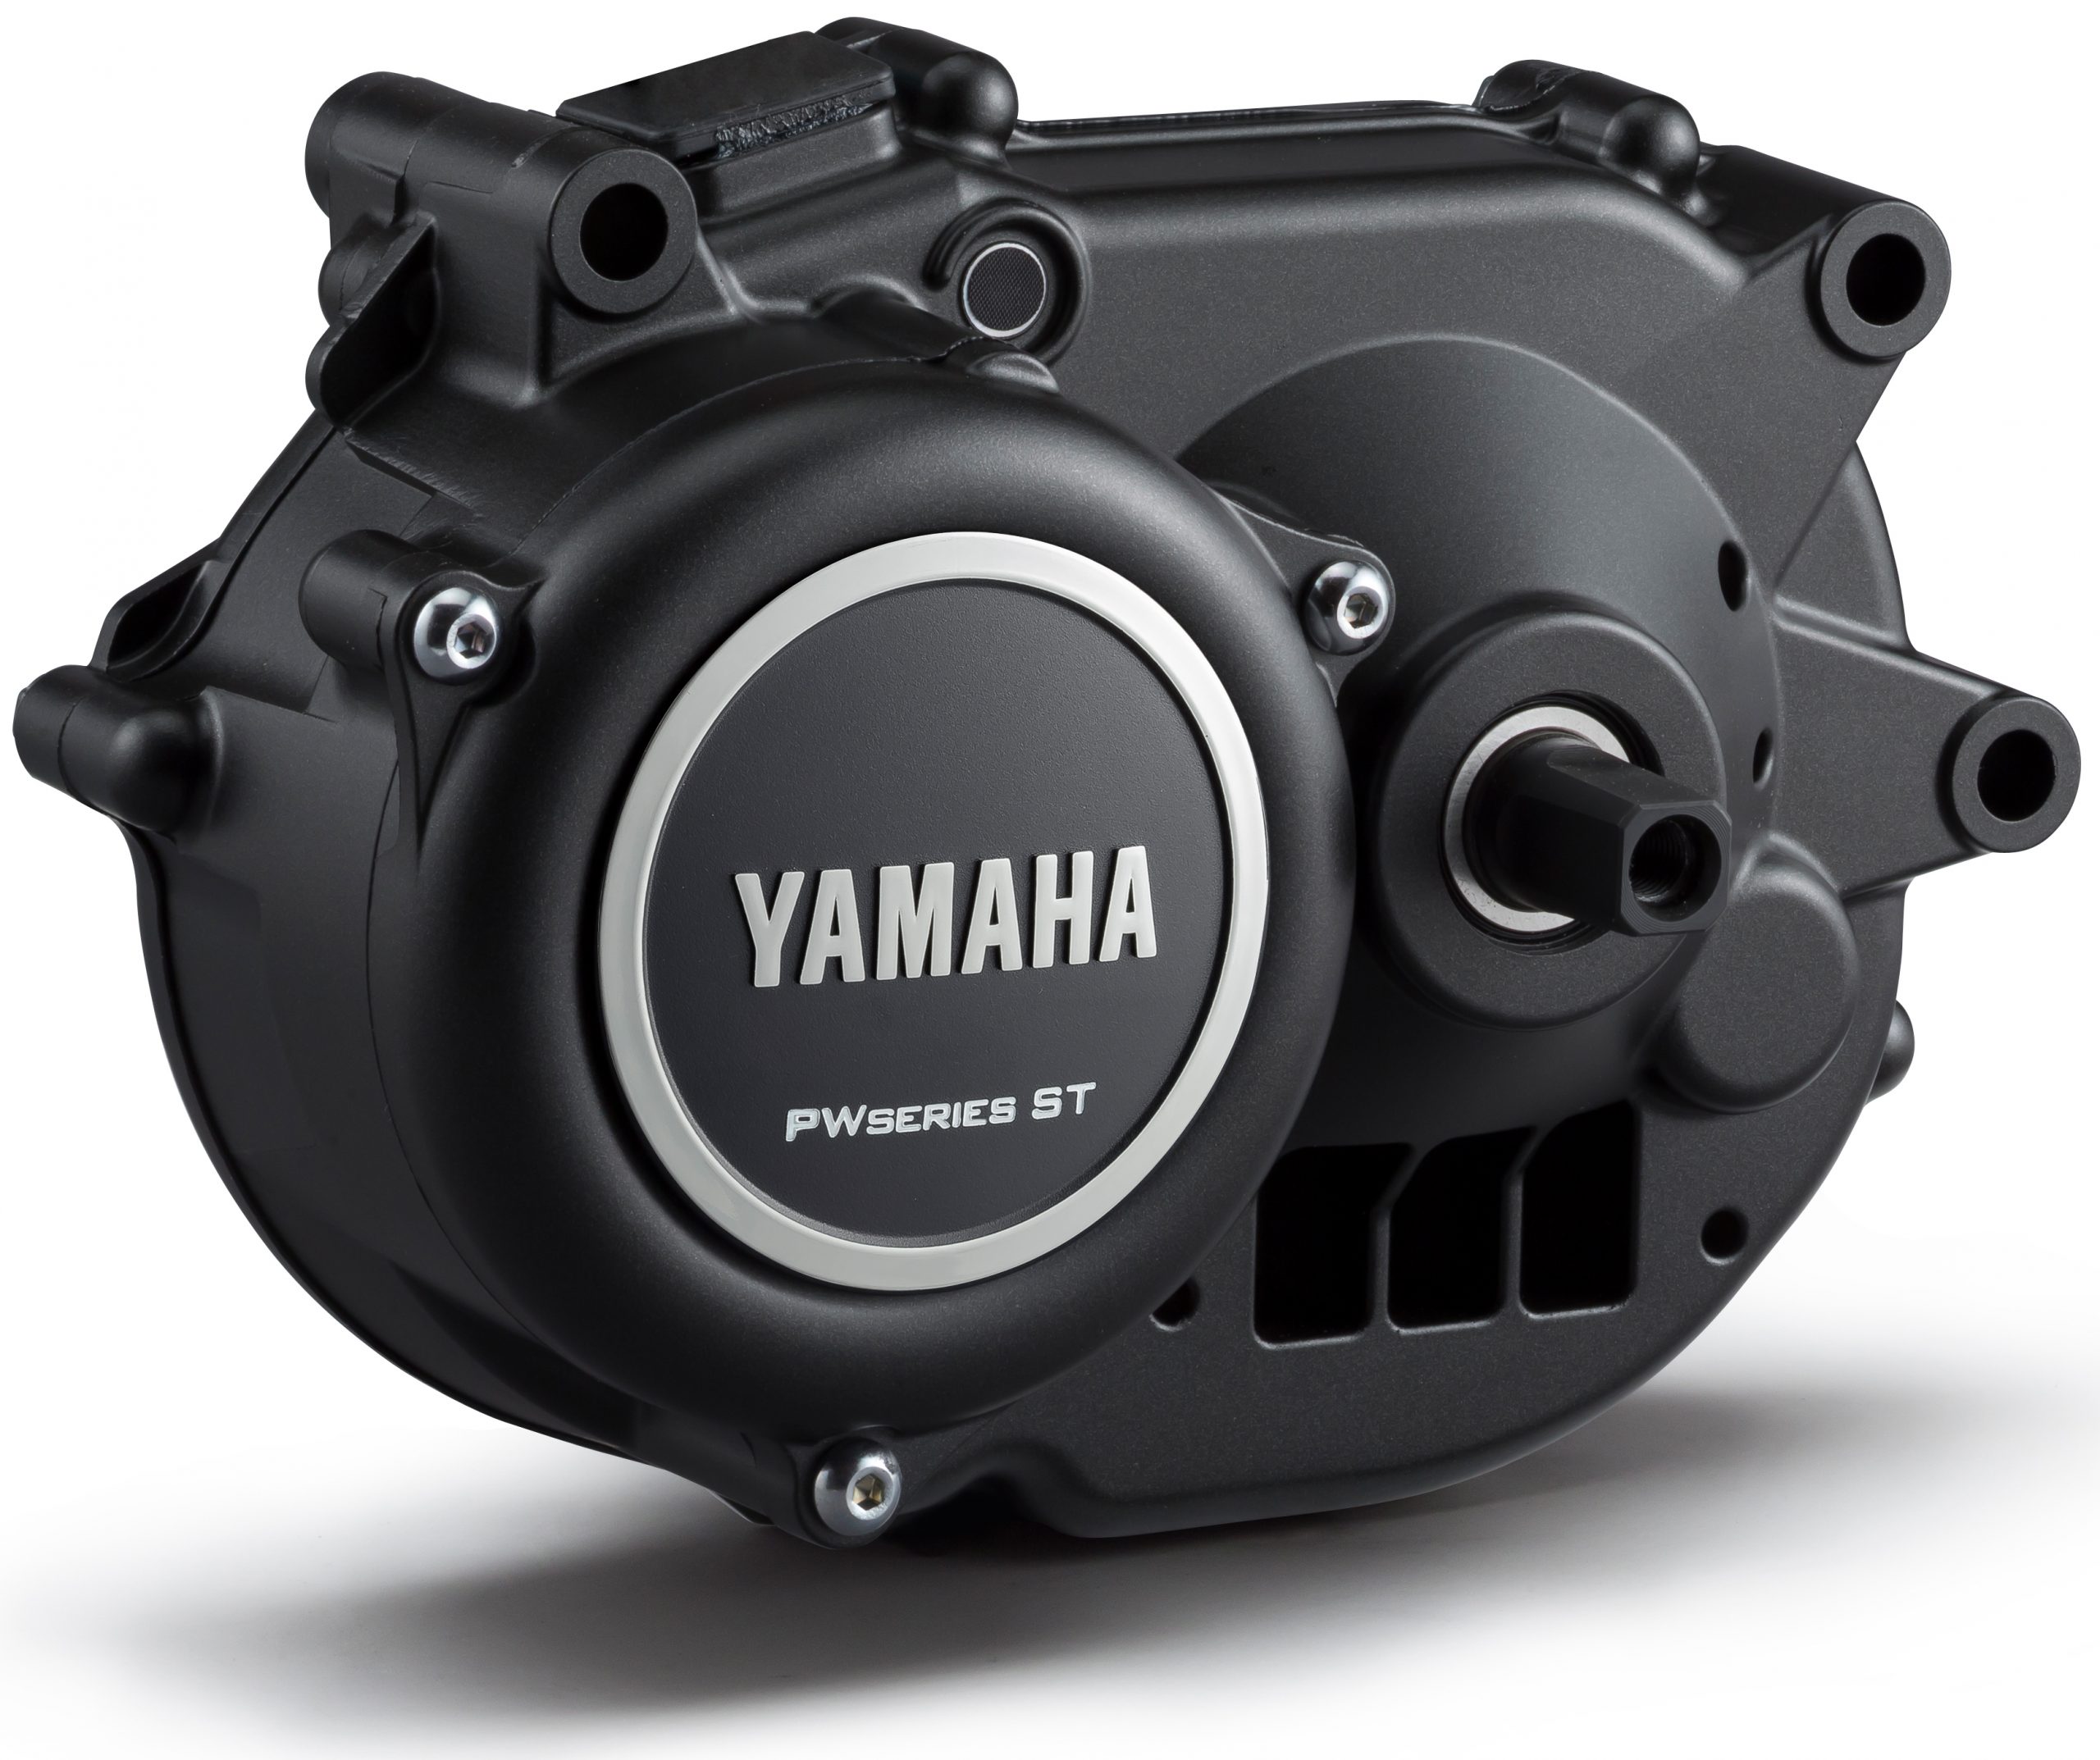 Yamaha PWseries ST Antrieb